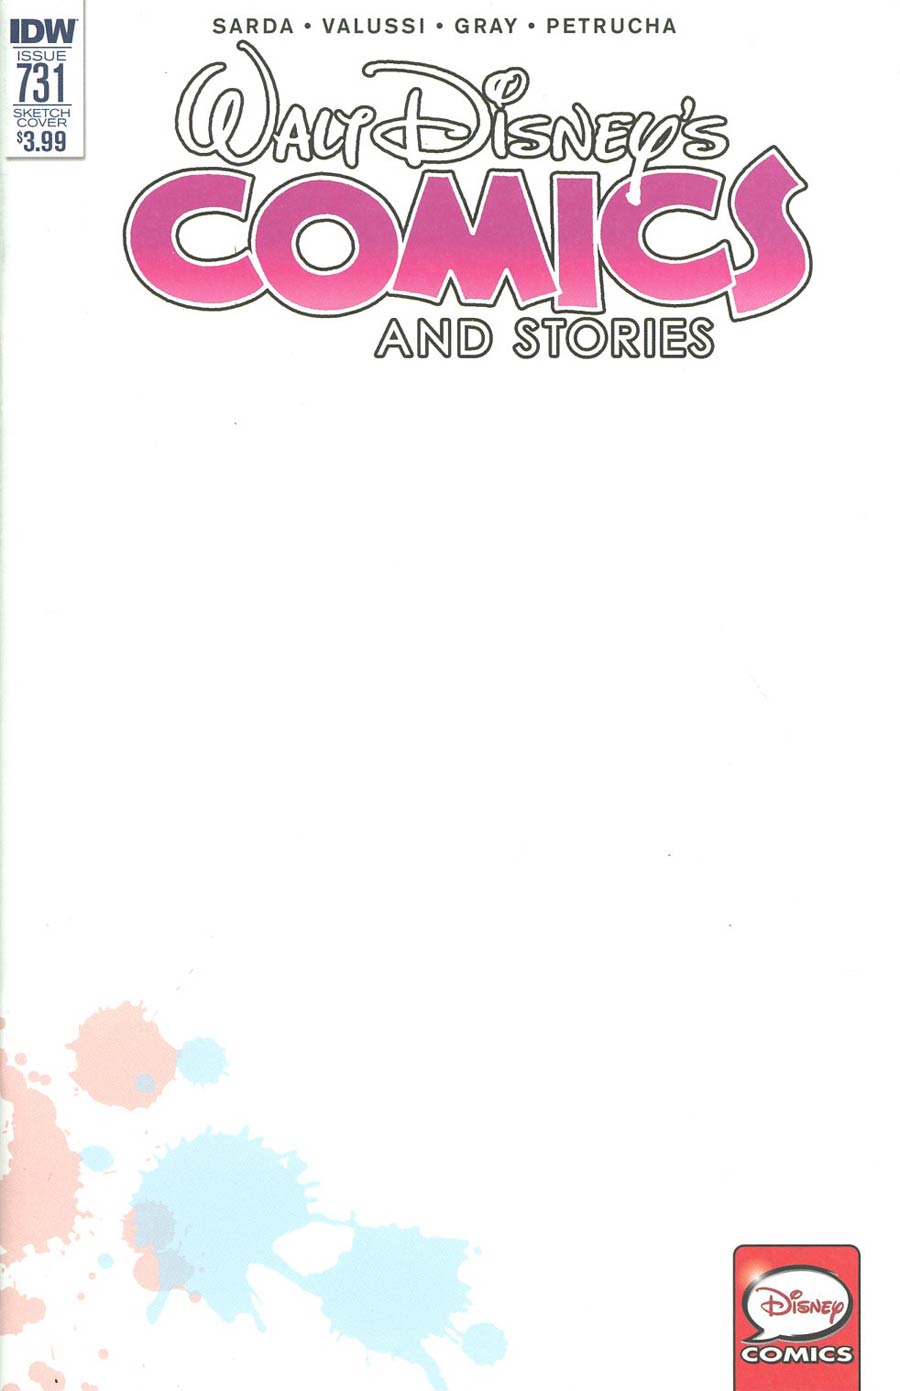 Walt Disneys Comics & Stories #731 Cover C Incentive Blank Variant Cover